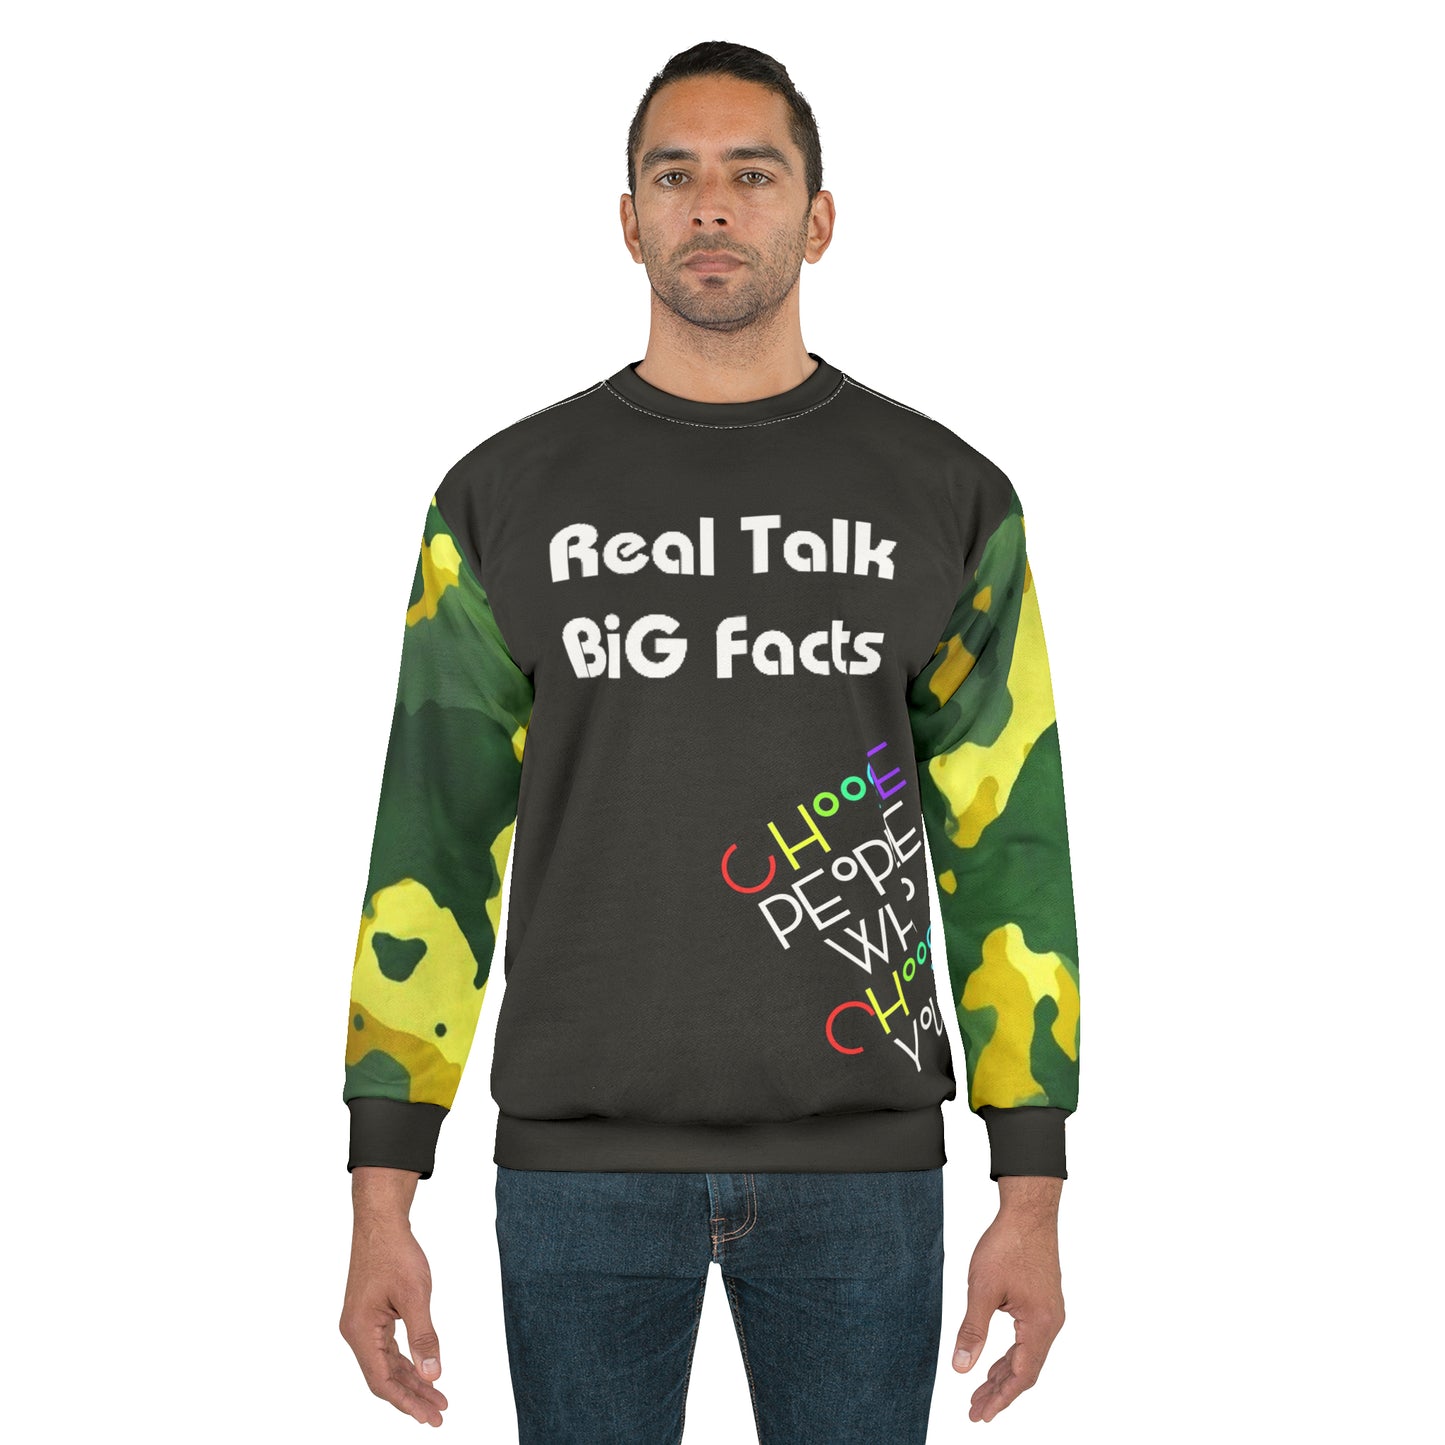 Real Talk BiG Facts “Choose People Who Choose You “ Unisex Sweatshirt